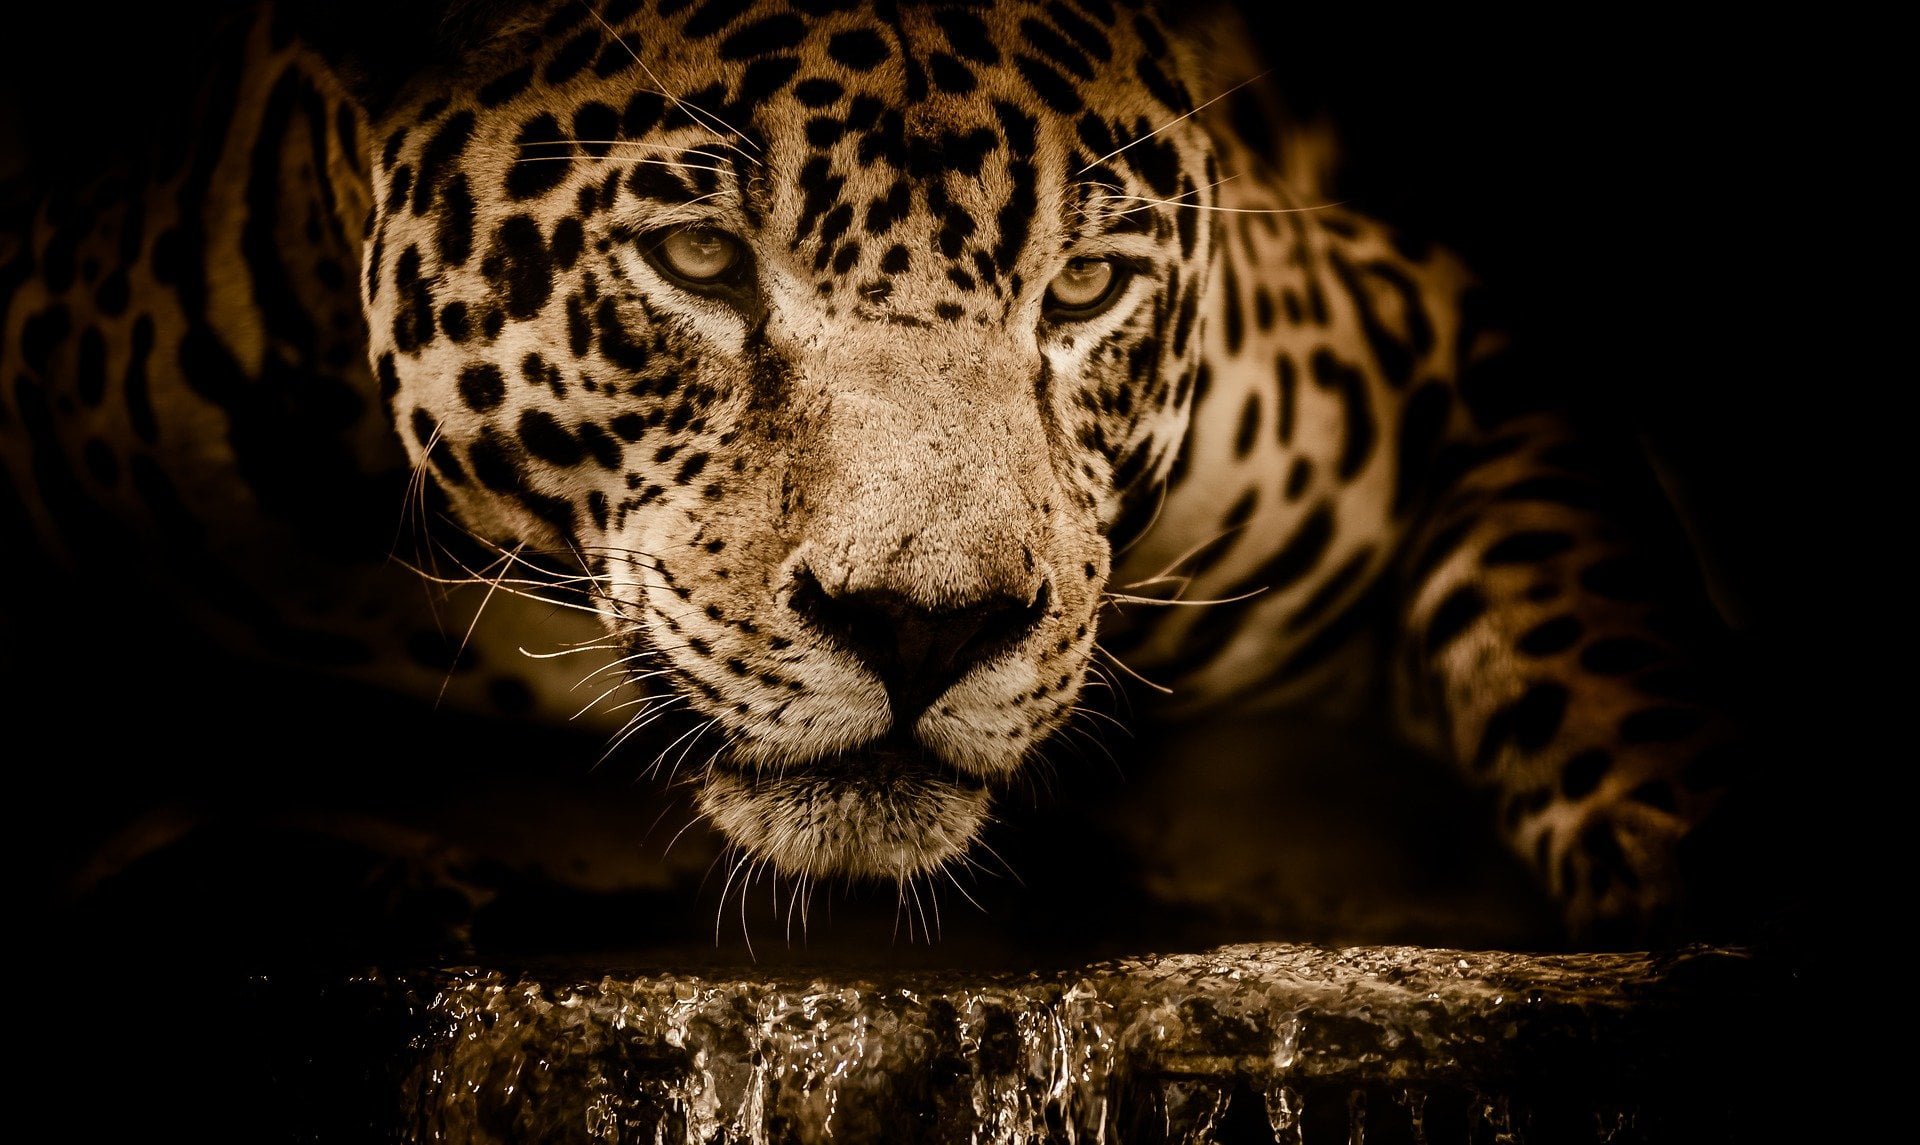 jaguar g243d37940 1920 15,000 Wild Jaguars Left, Humans Must Work Together Across Borders to Protect